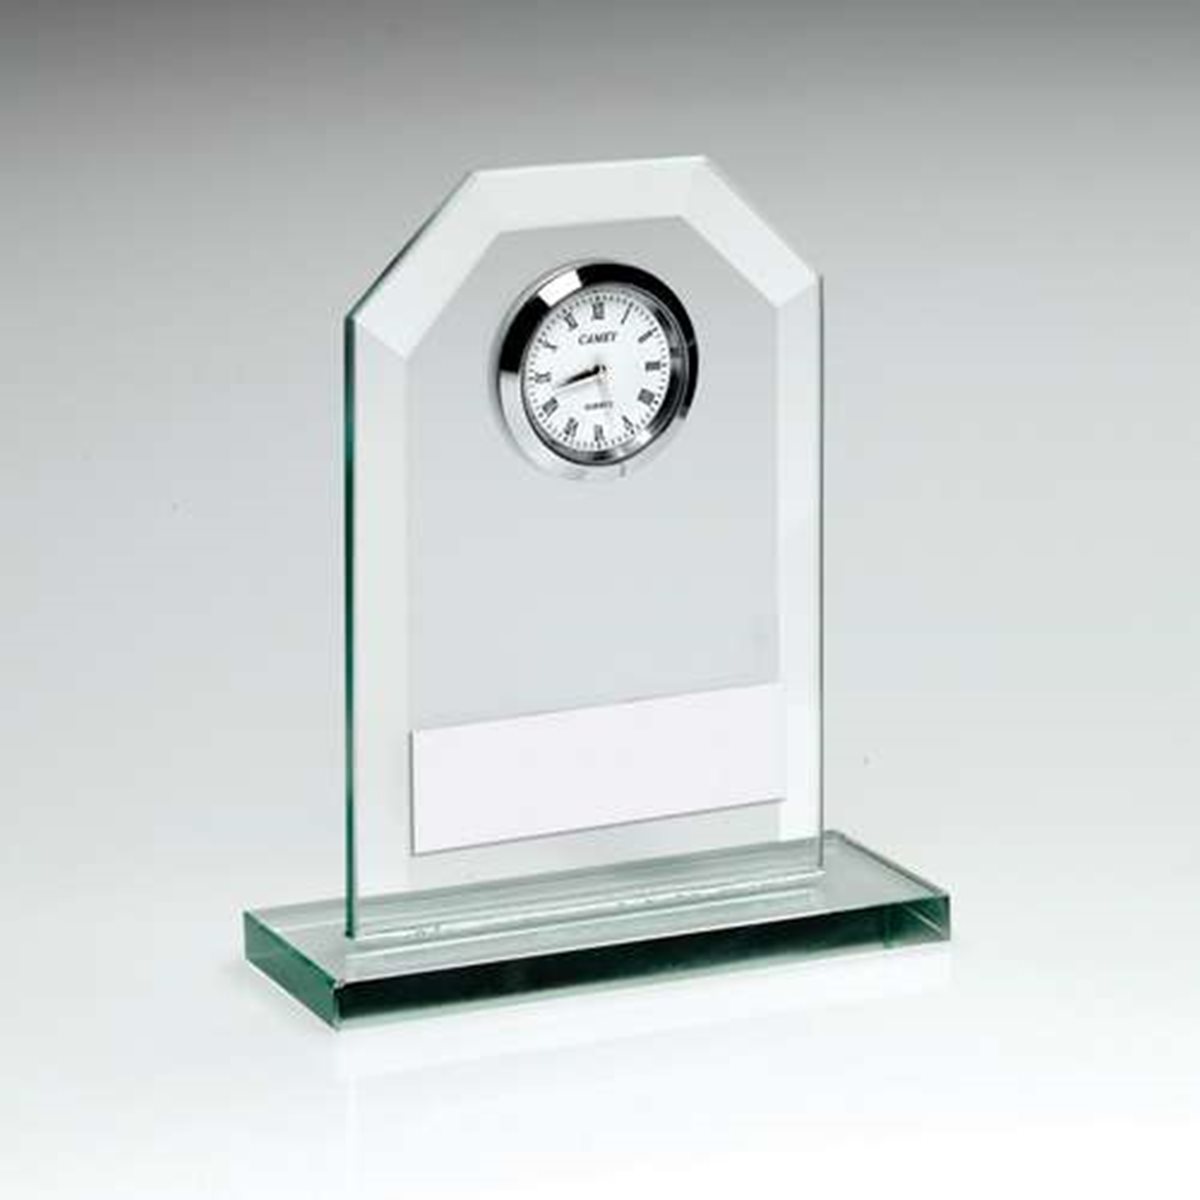 Glass Presentation Clock1A